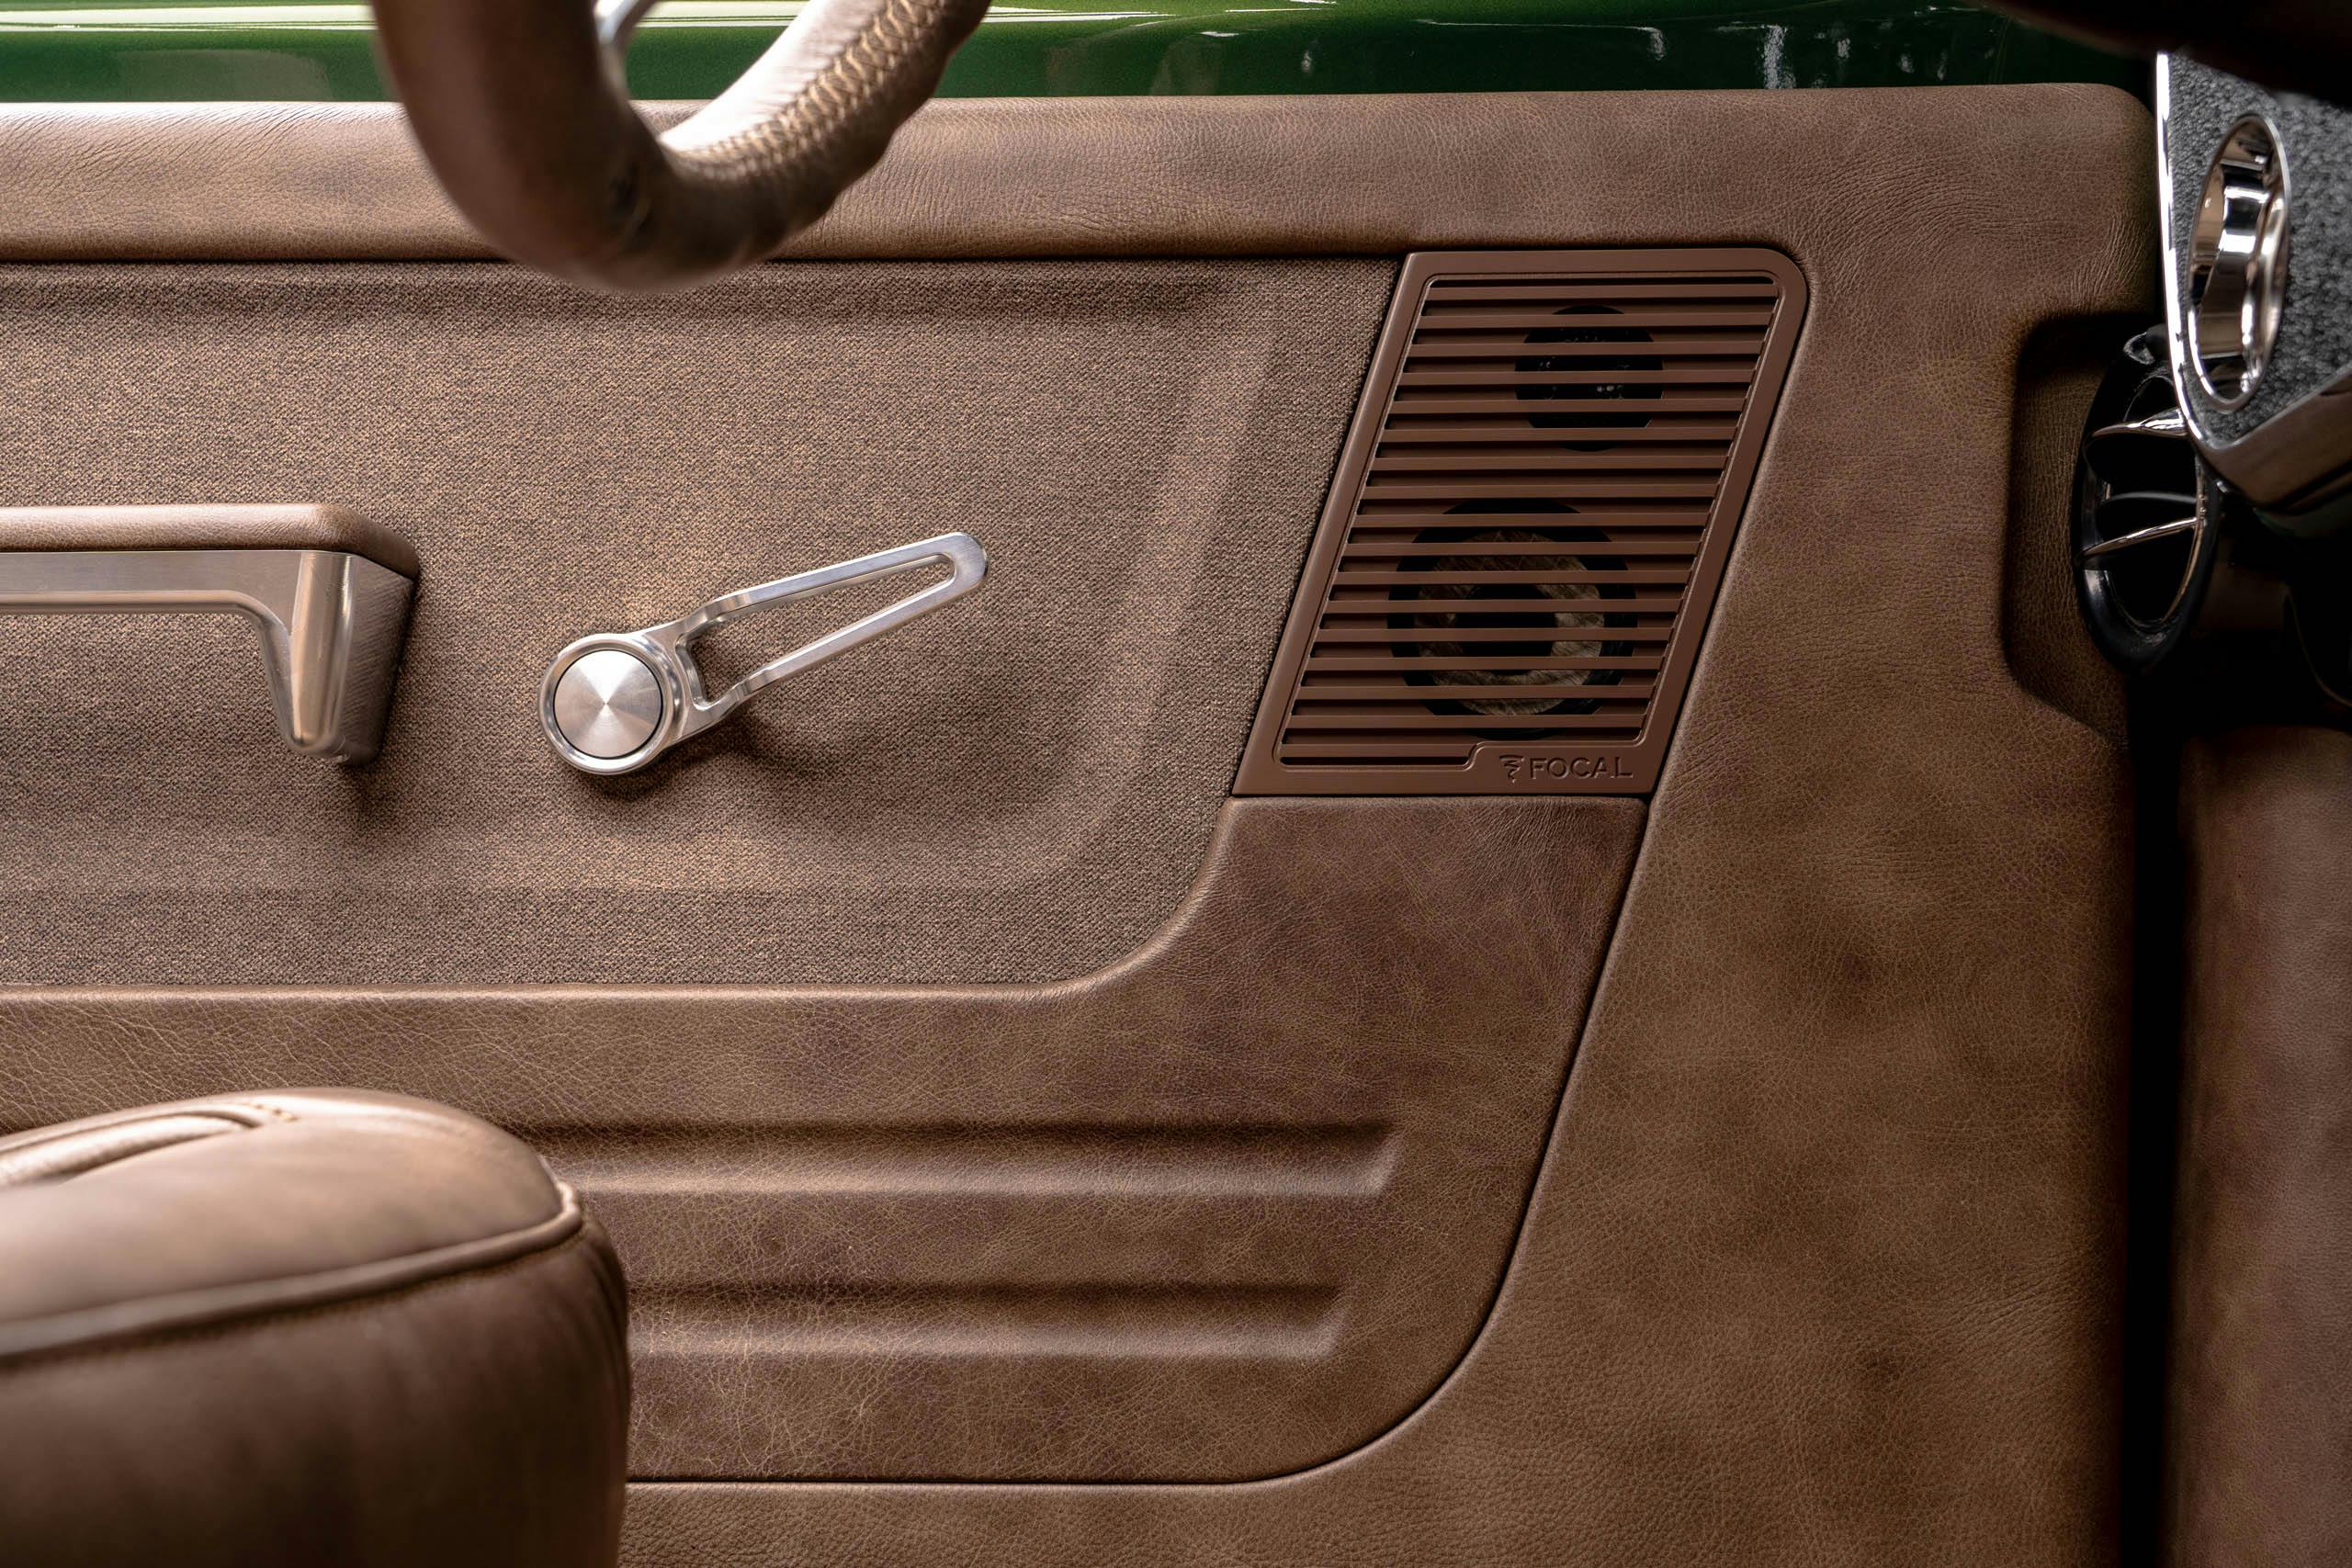 Velocity Modern Classics K5 Chevy Blazer restomod interior door details